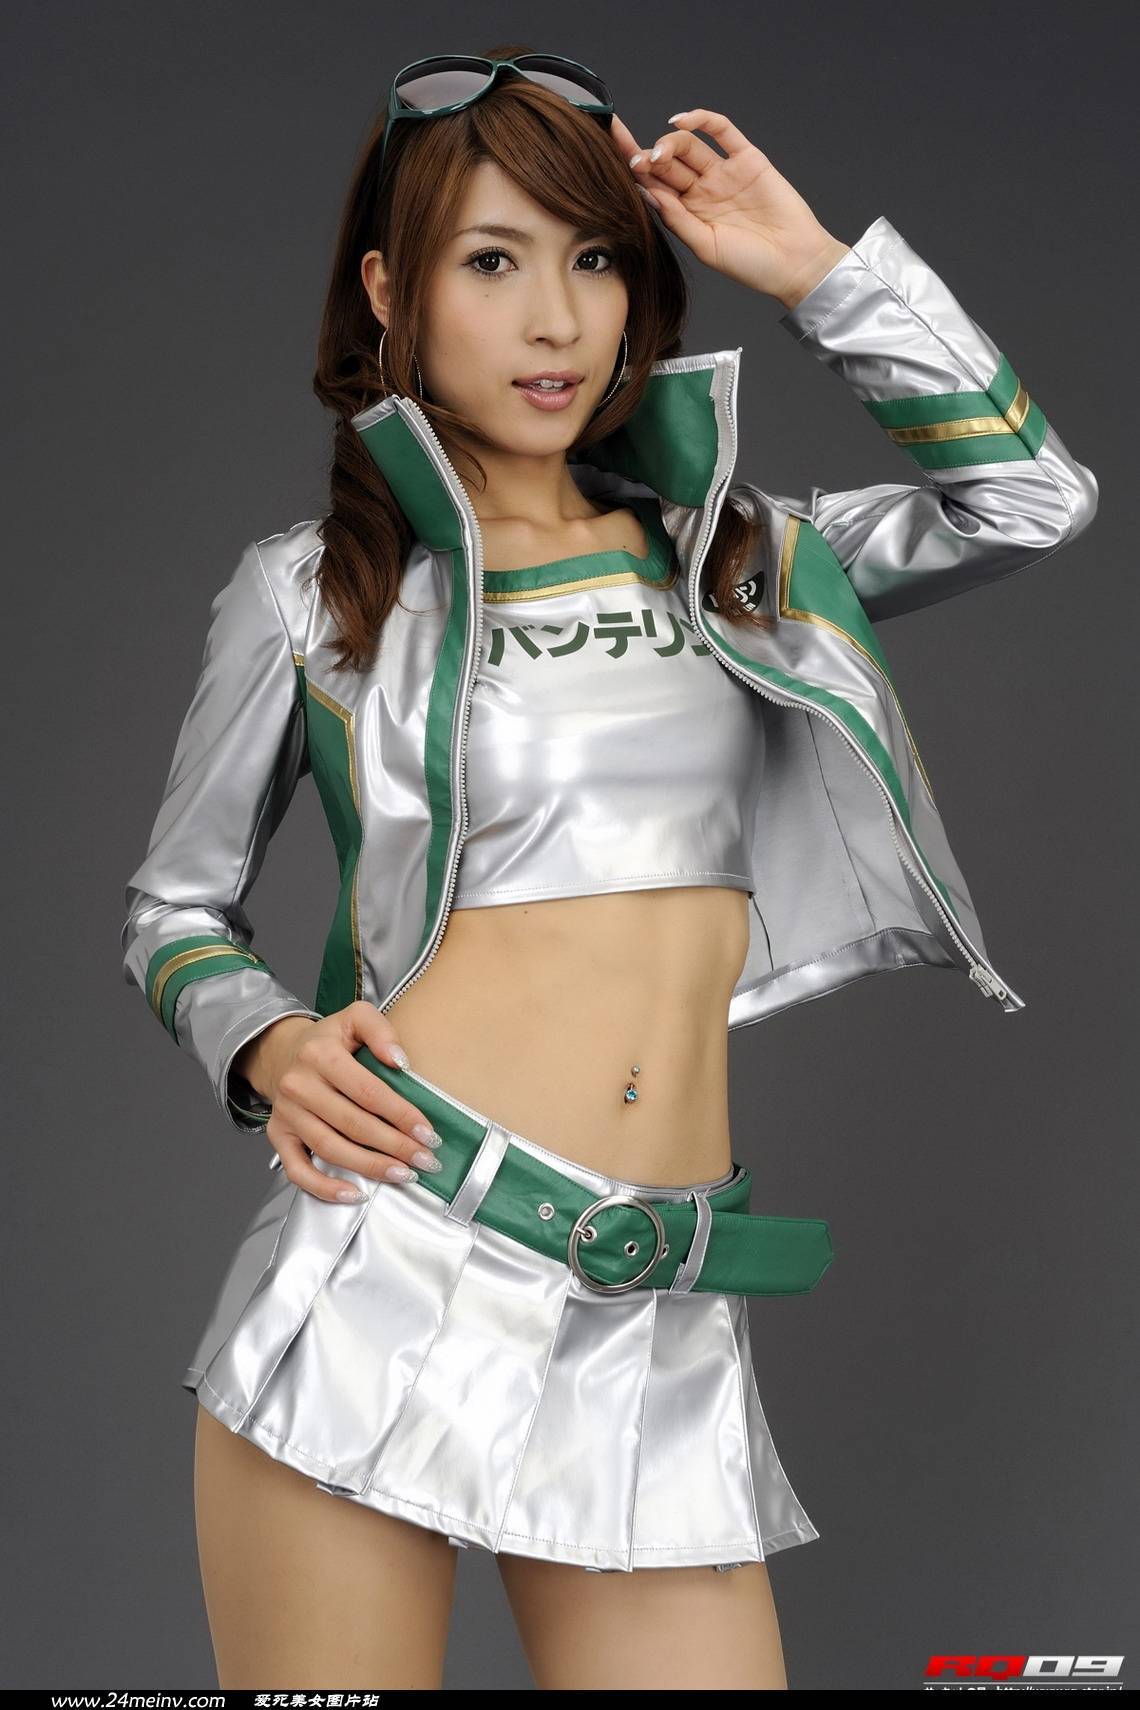 Takahashi Chihiro - model car uniform temptation